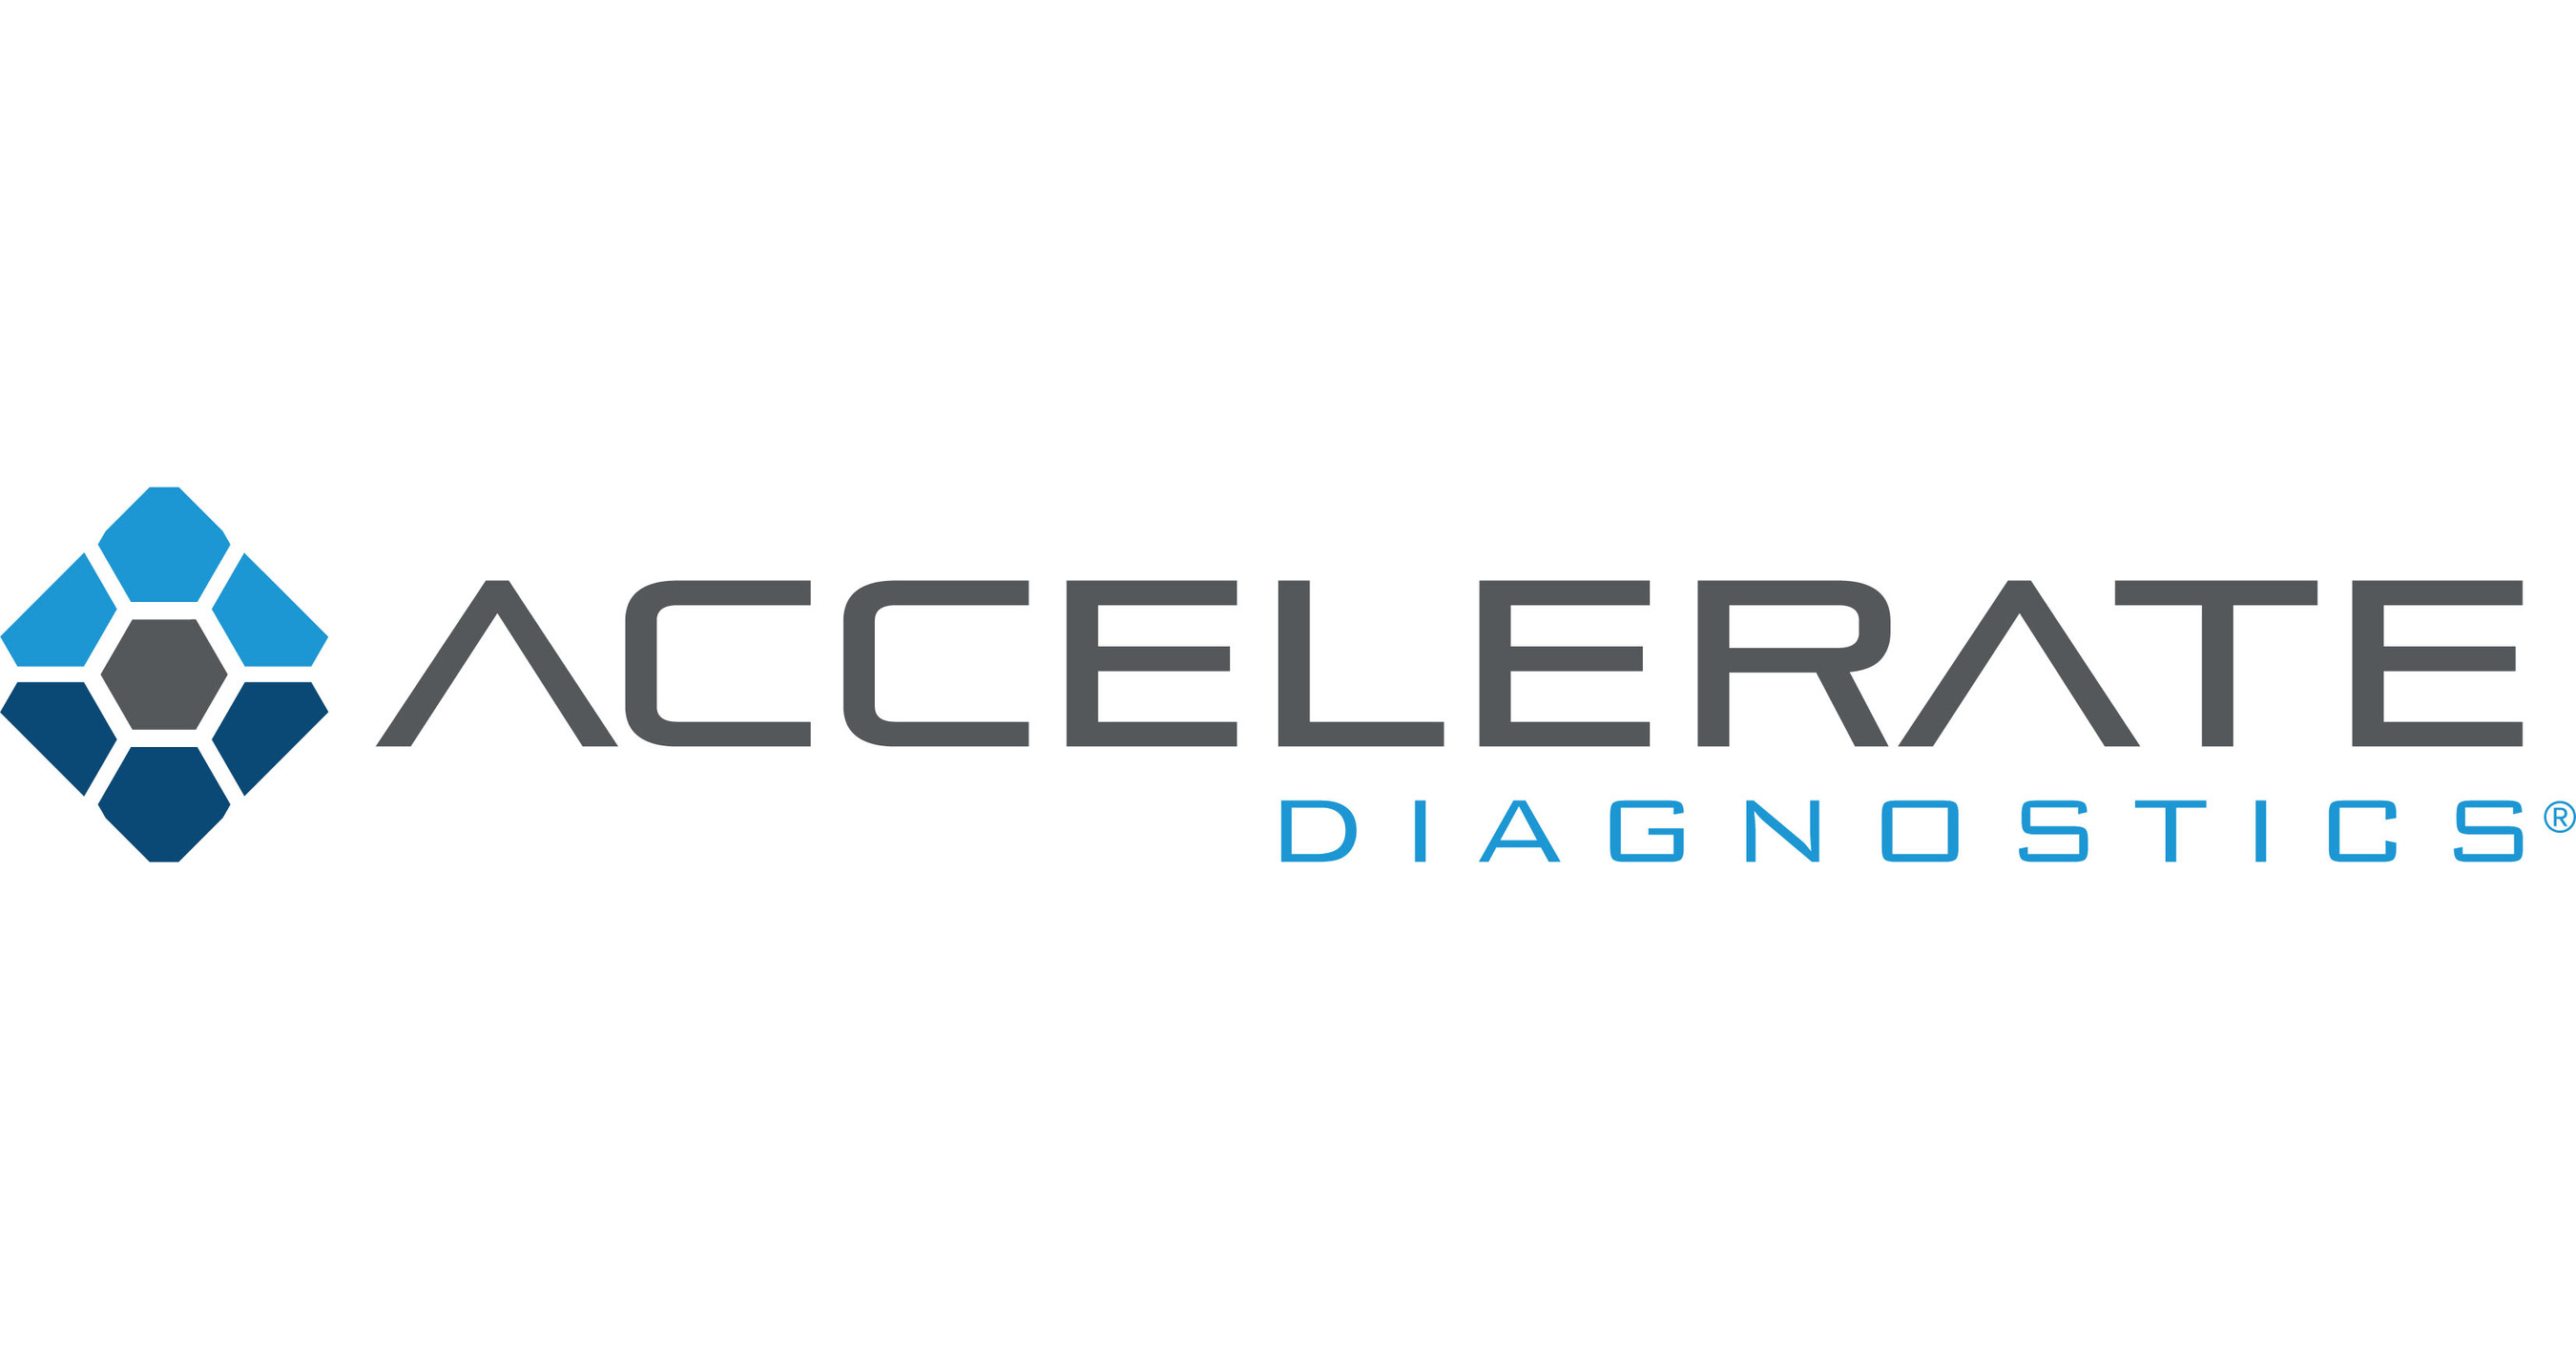 Accelerate Diagnostics Announces 1-for-10 Reverse Stock Split